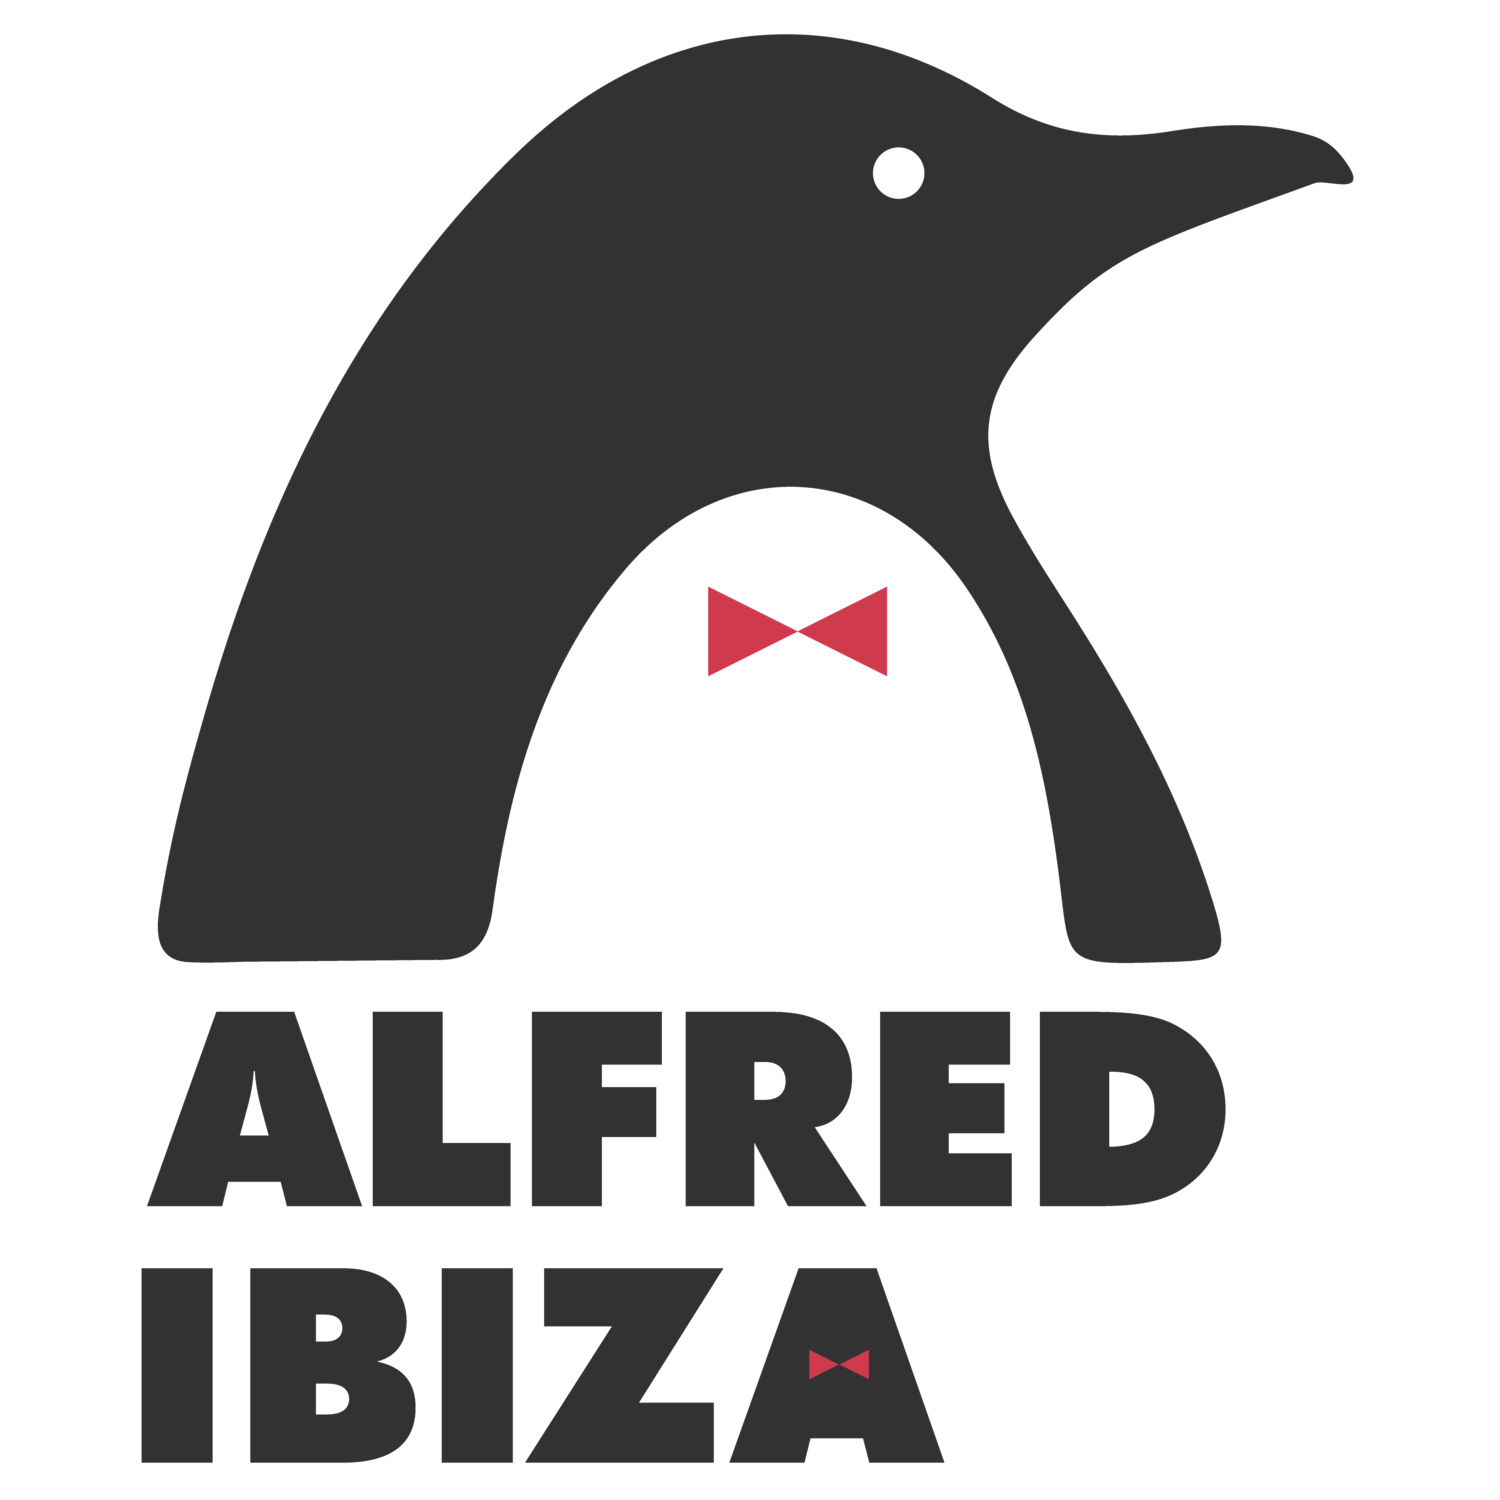 Alfred Ibiza